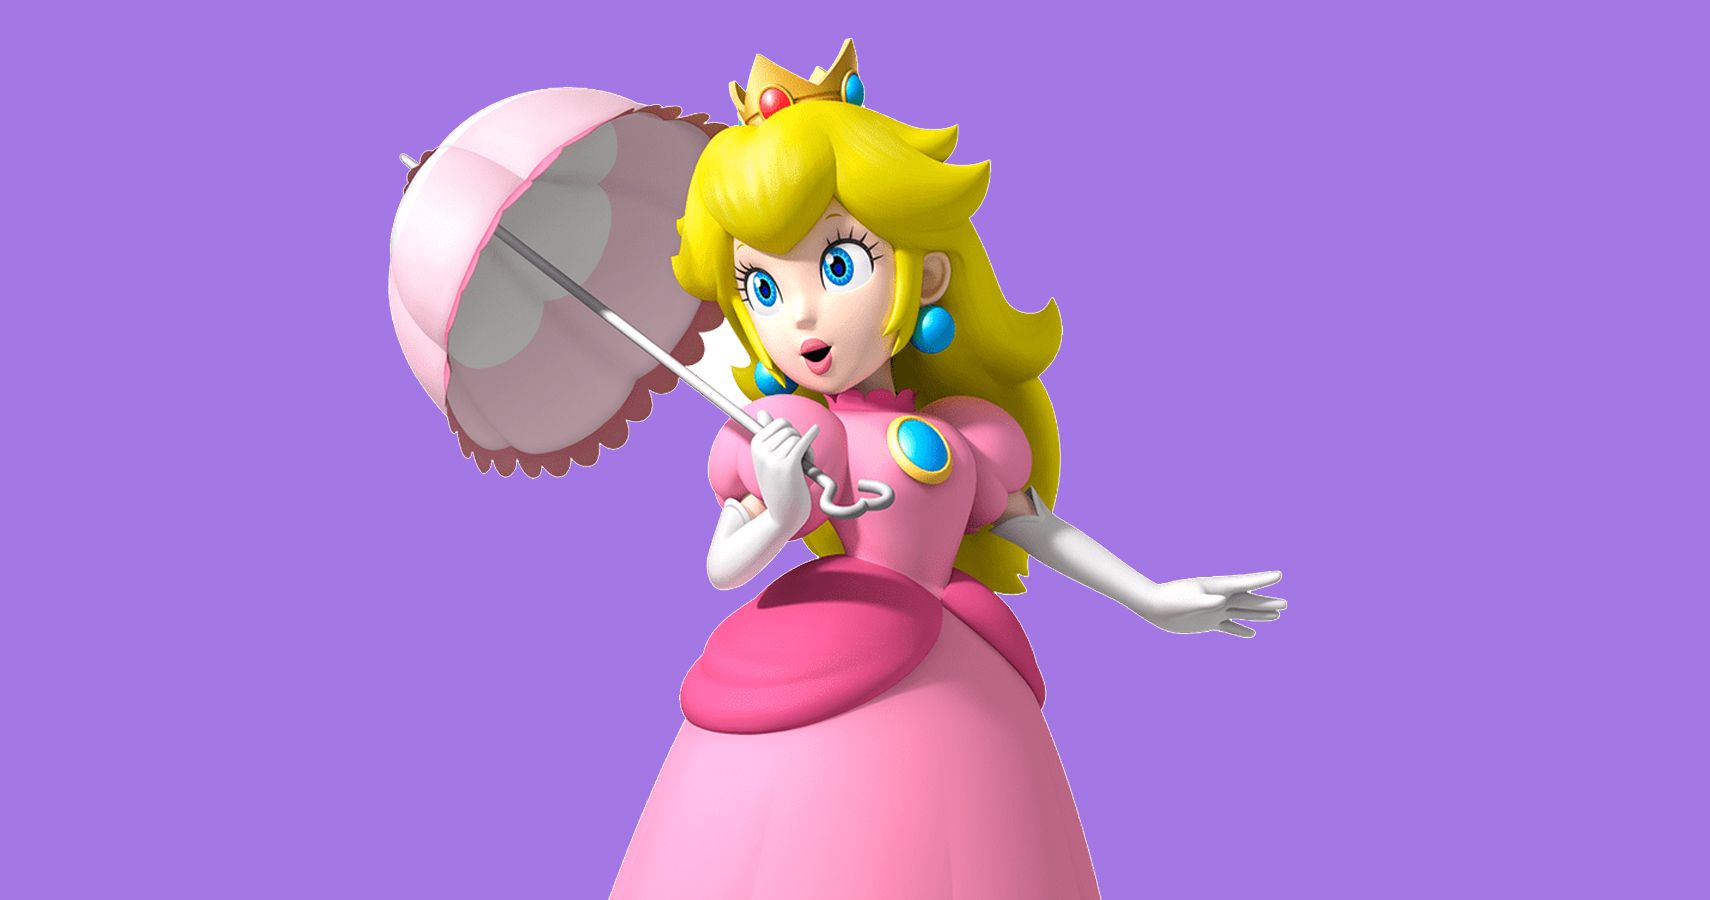 Every Super Mario Game Where You Can Play As Princess Peach